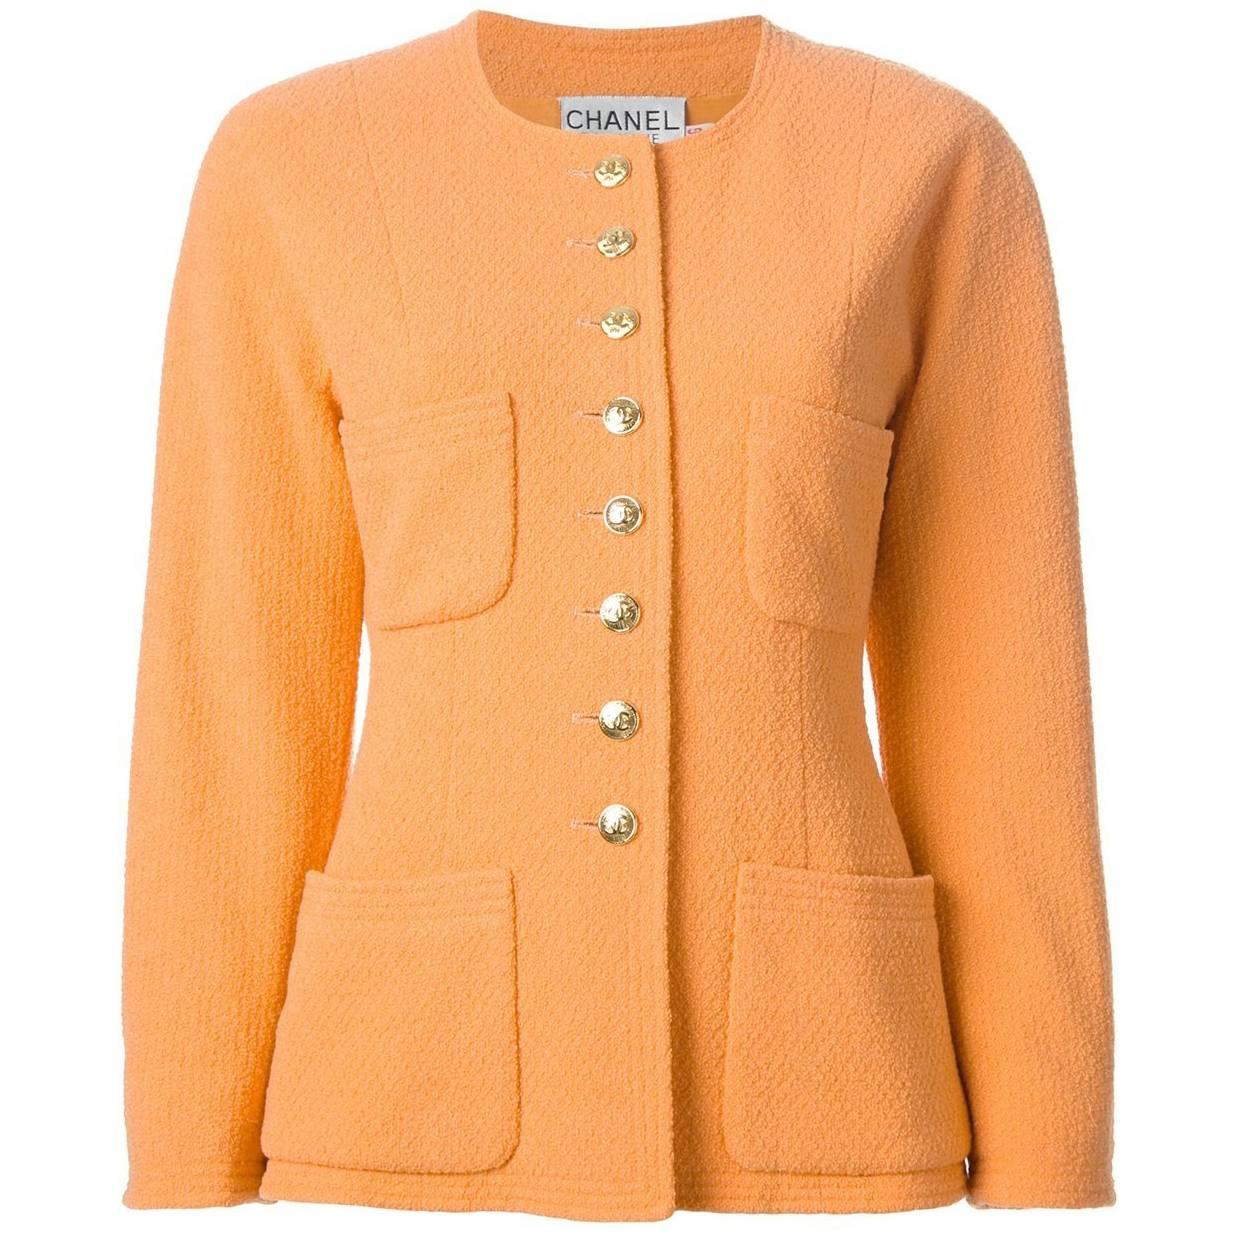 Chanel Orange Wool Jacket, 1980s